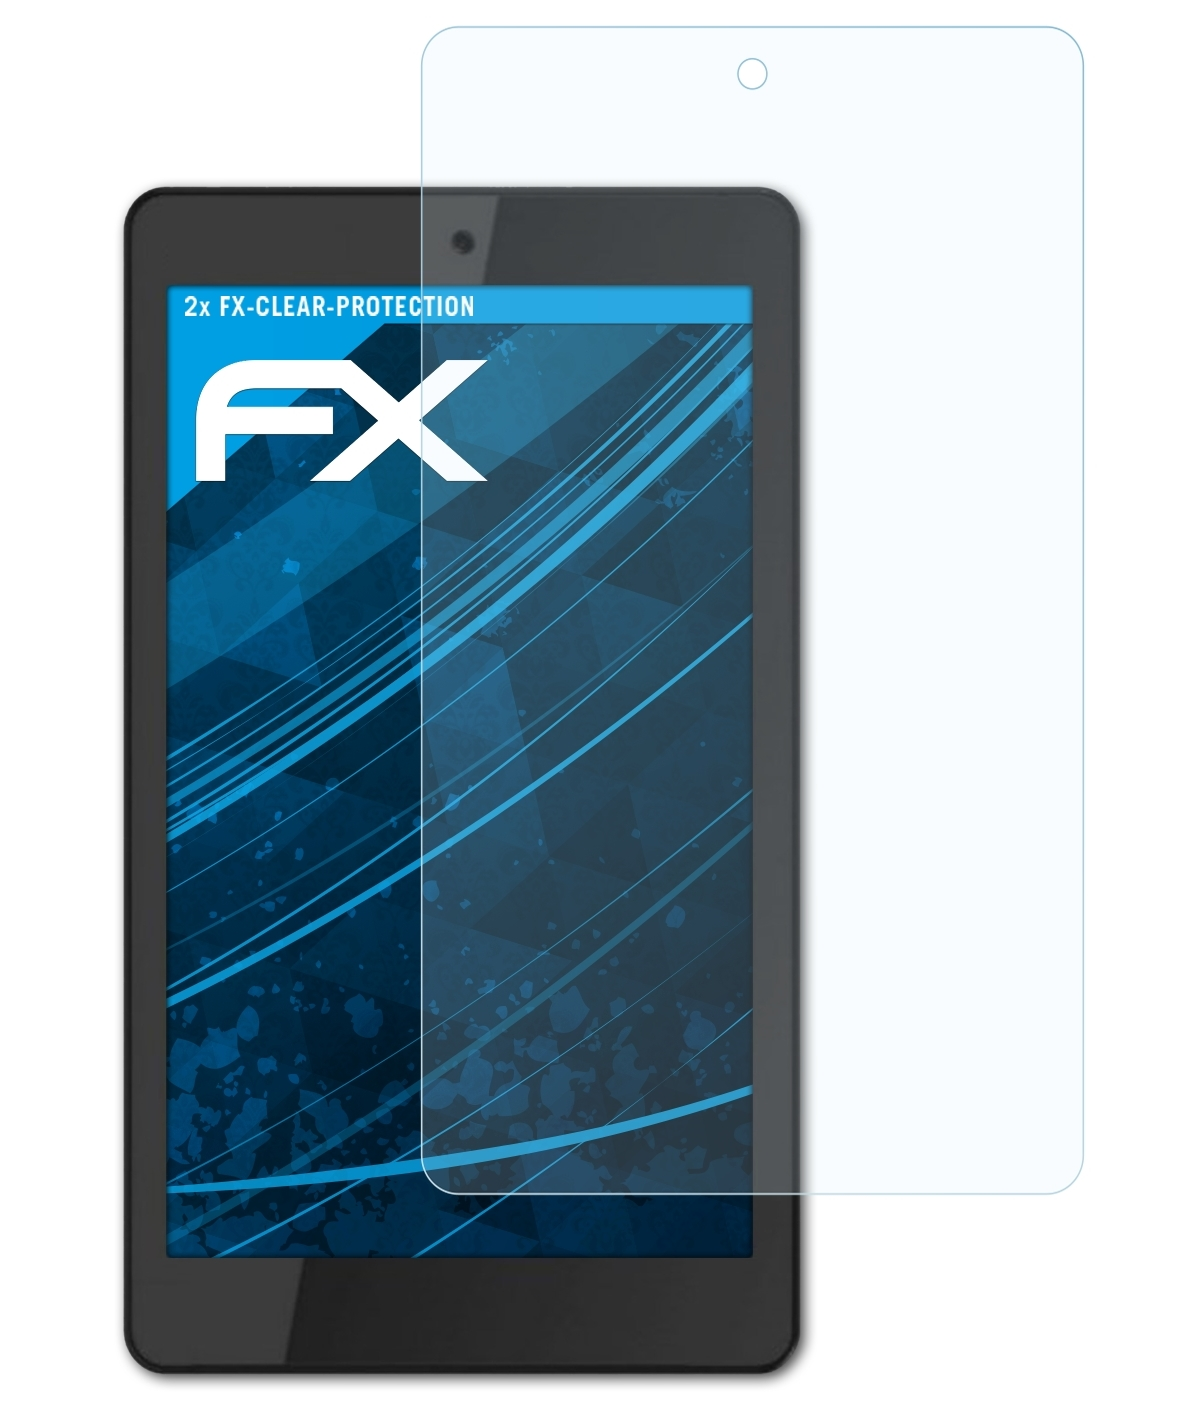 (8 2x FX-Clear 300 inch)) ATFOLIX IdeaPad Lenovo Miix Displayschutz(für